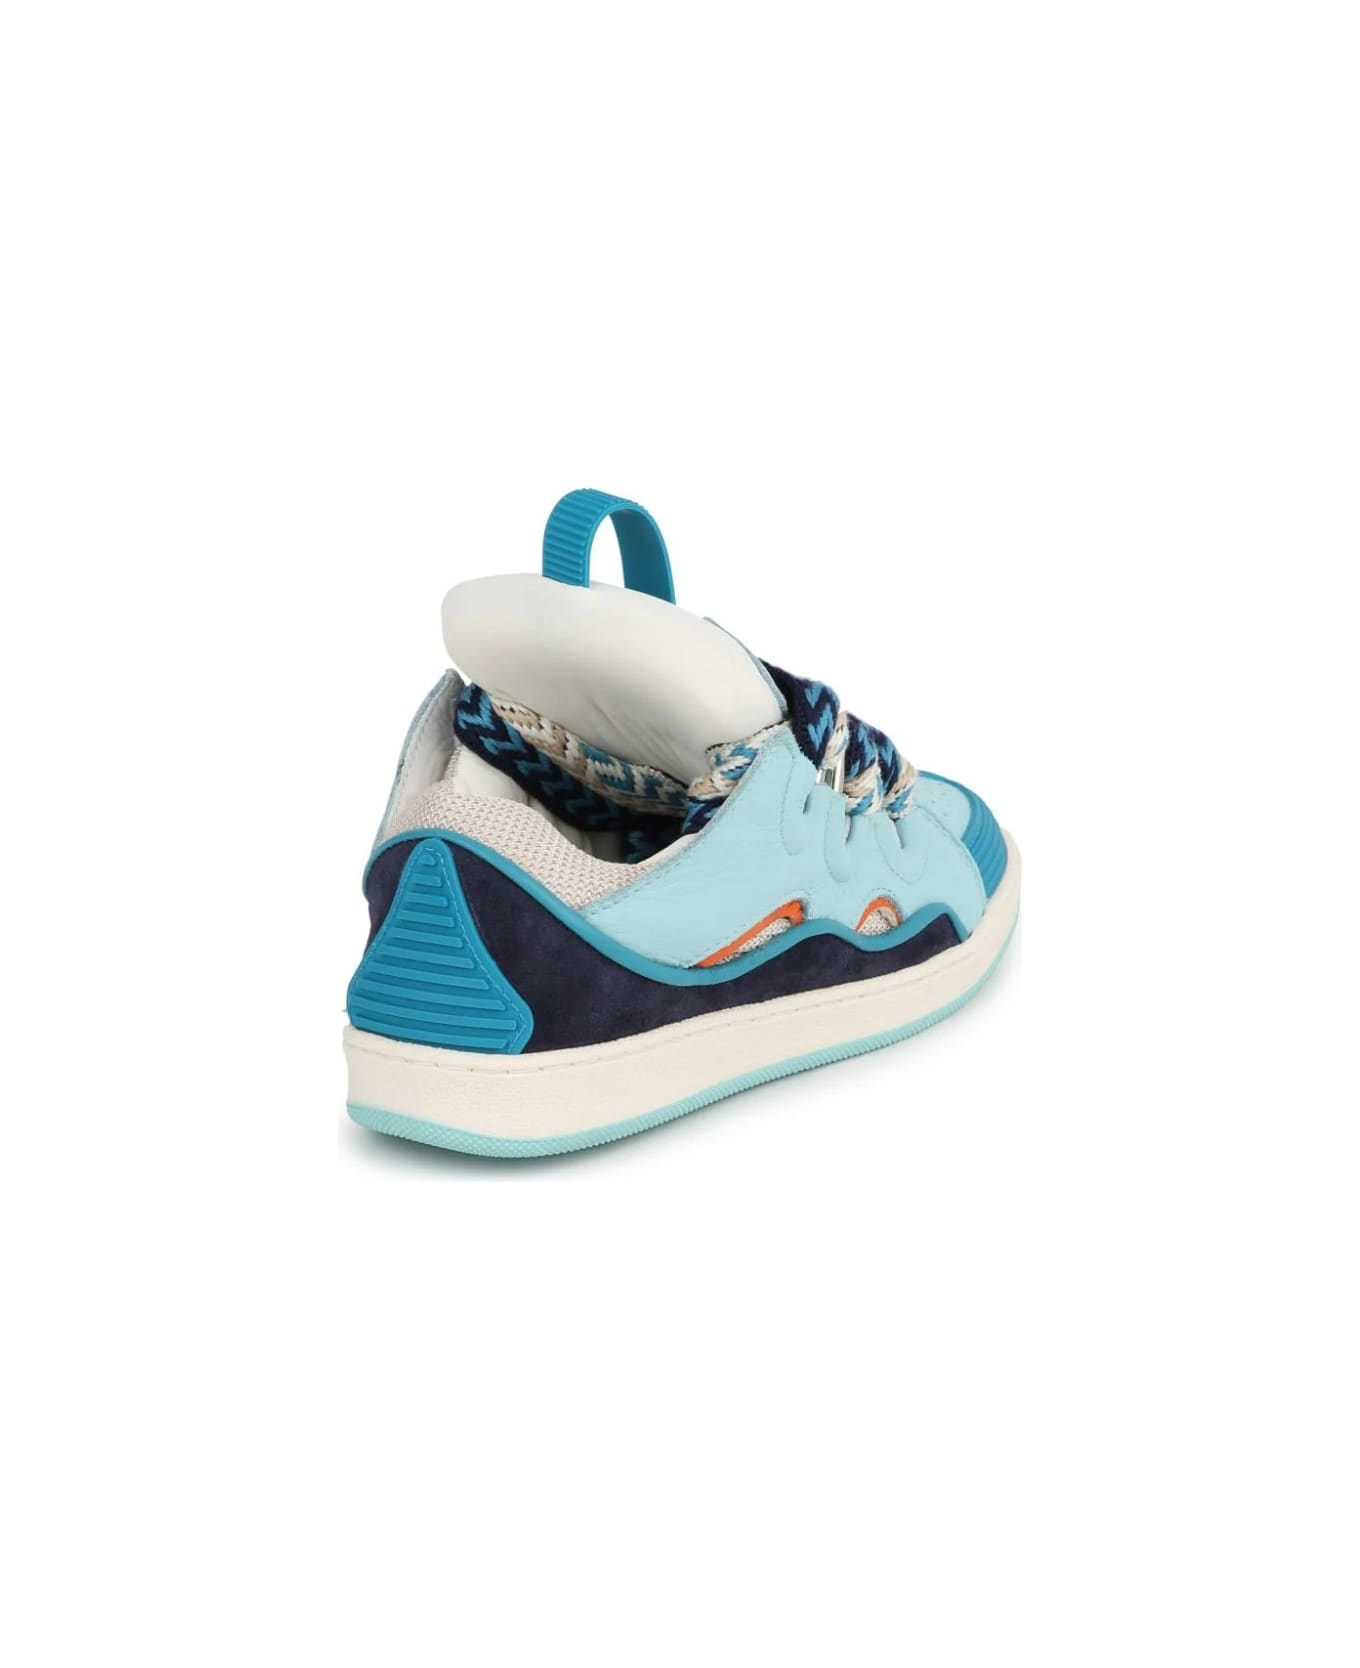 Lanvin Aquamarine Leather Curb Sneakers - Blue シューズ